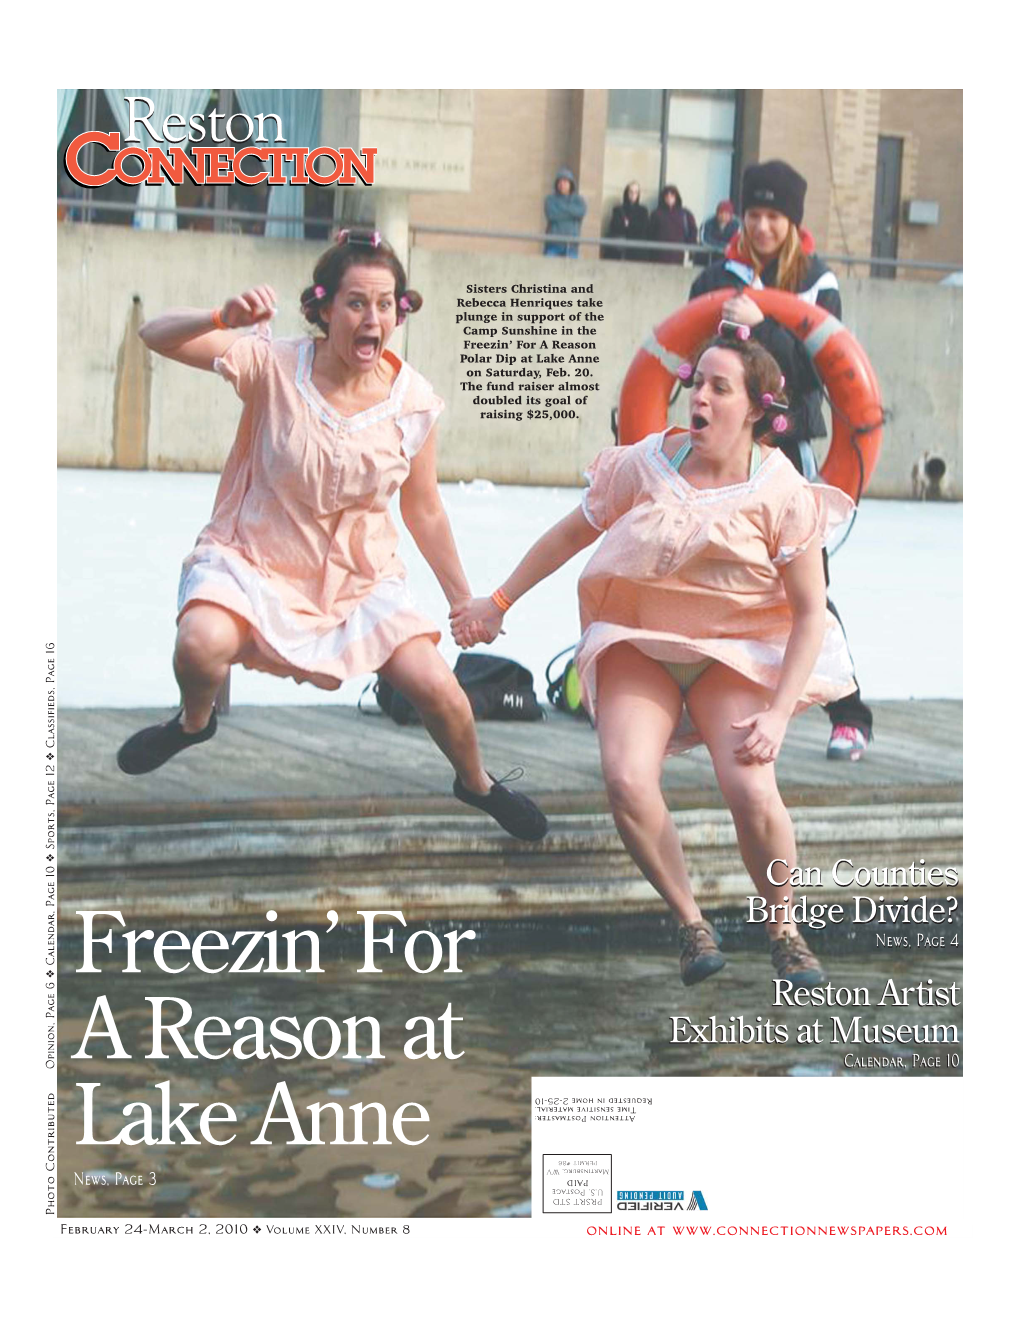 Freezin' for a Reason at Lake Anne